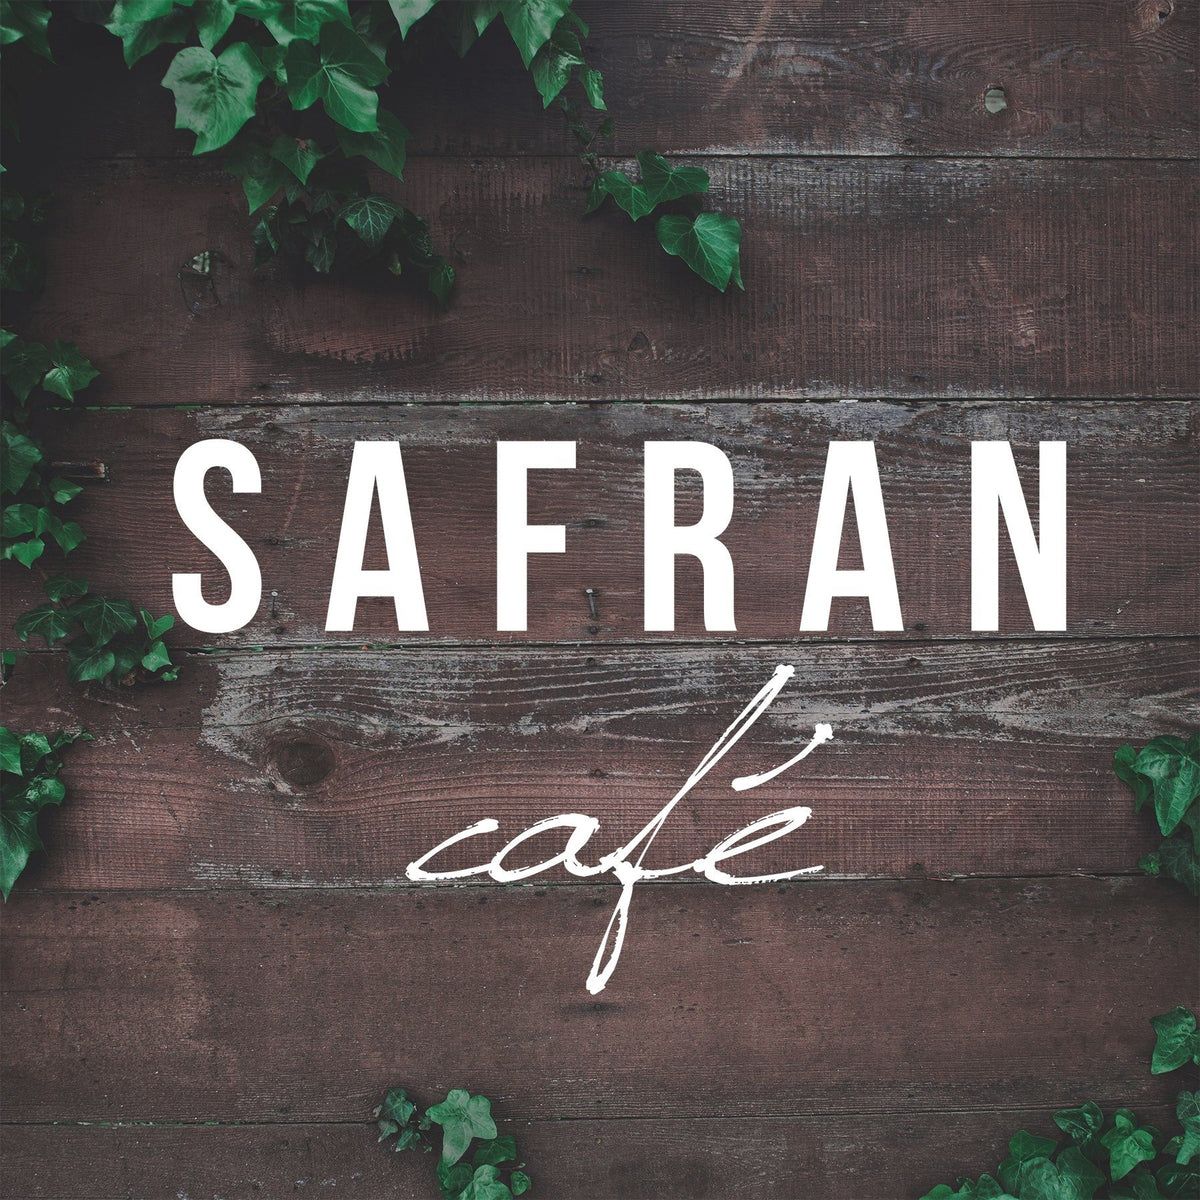 ”Safran